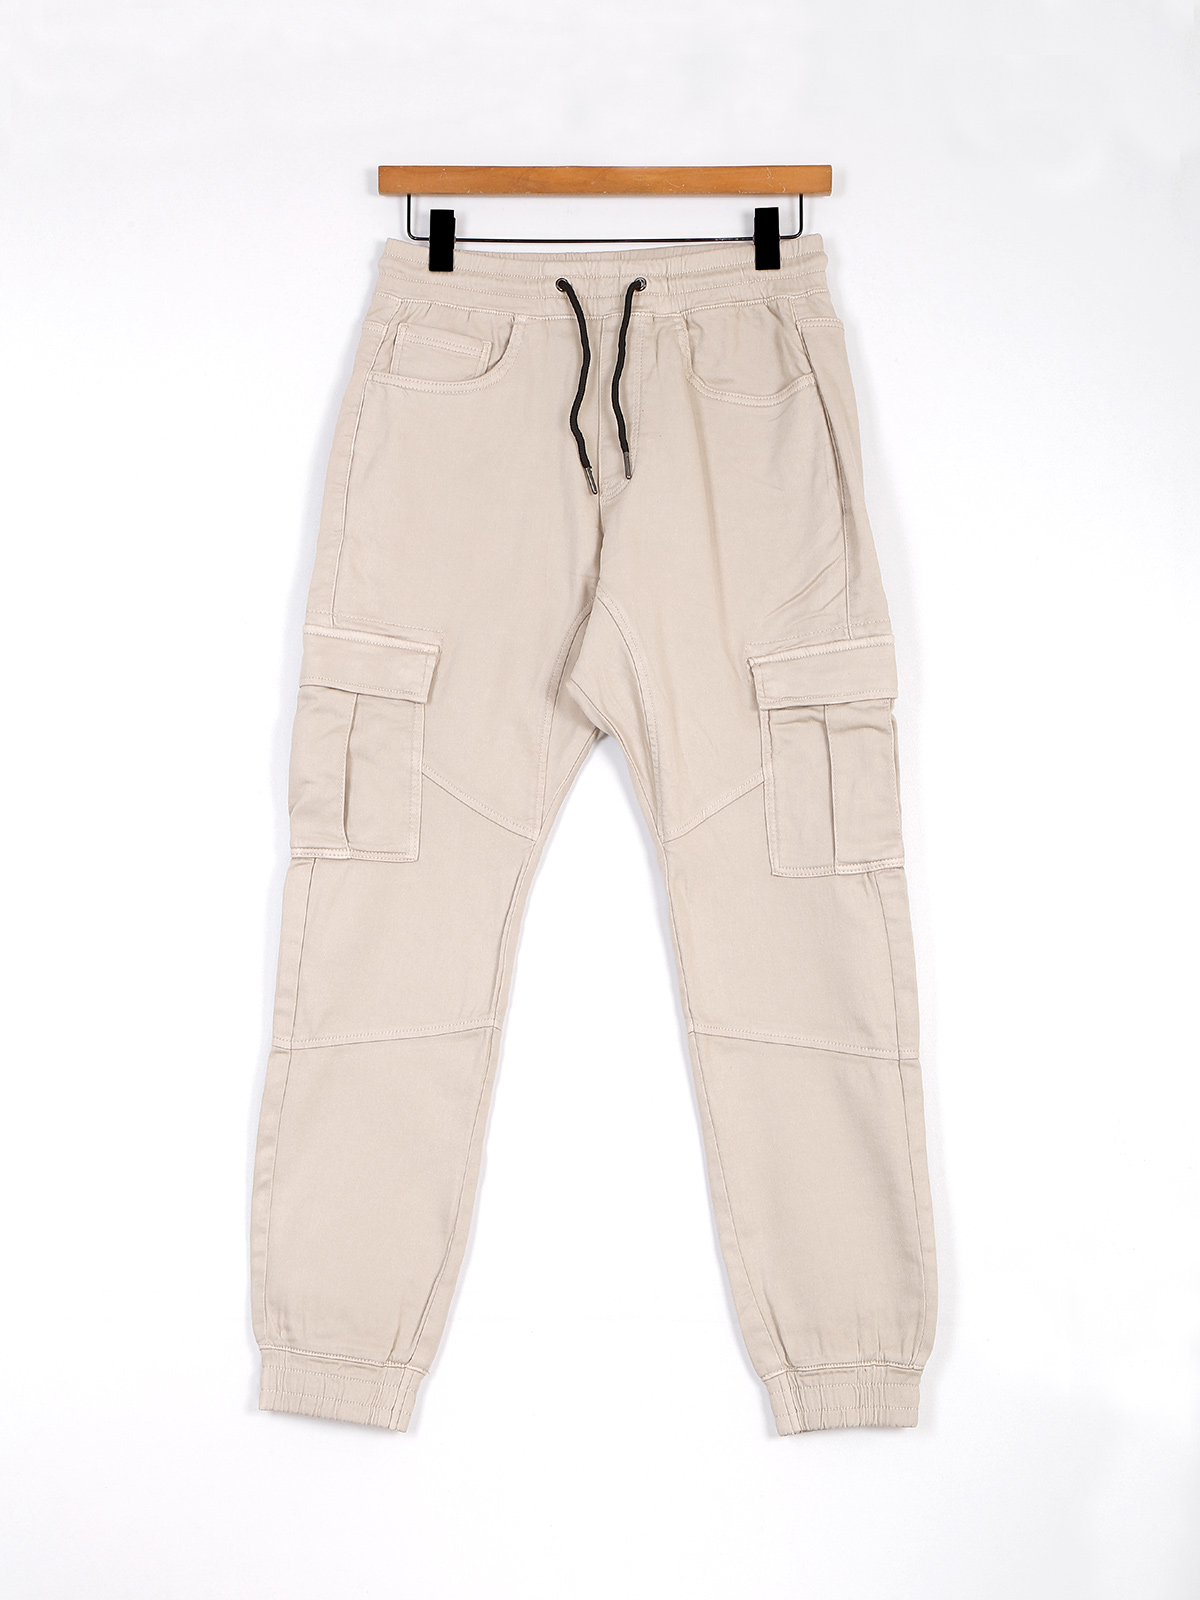 Buy CELIO Solid Cotton Slim Fit Men's Casual Trousers | Shoppers Stop